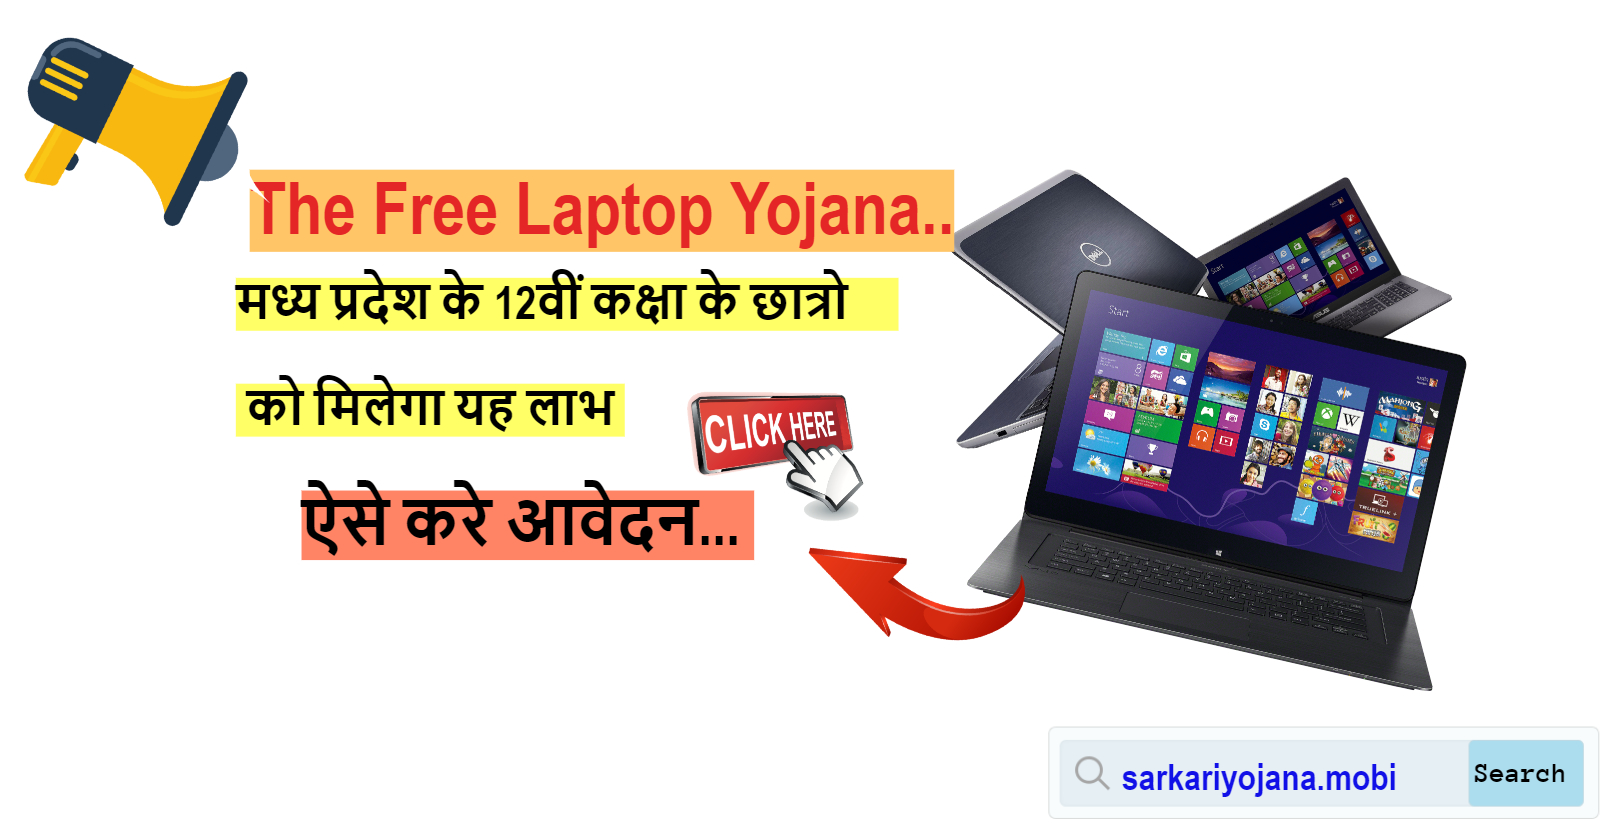 The Free Laptop Yojana